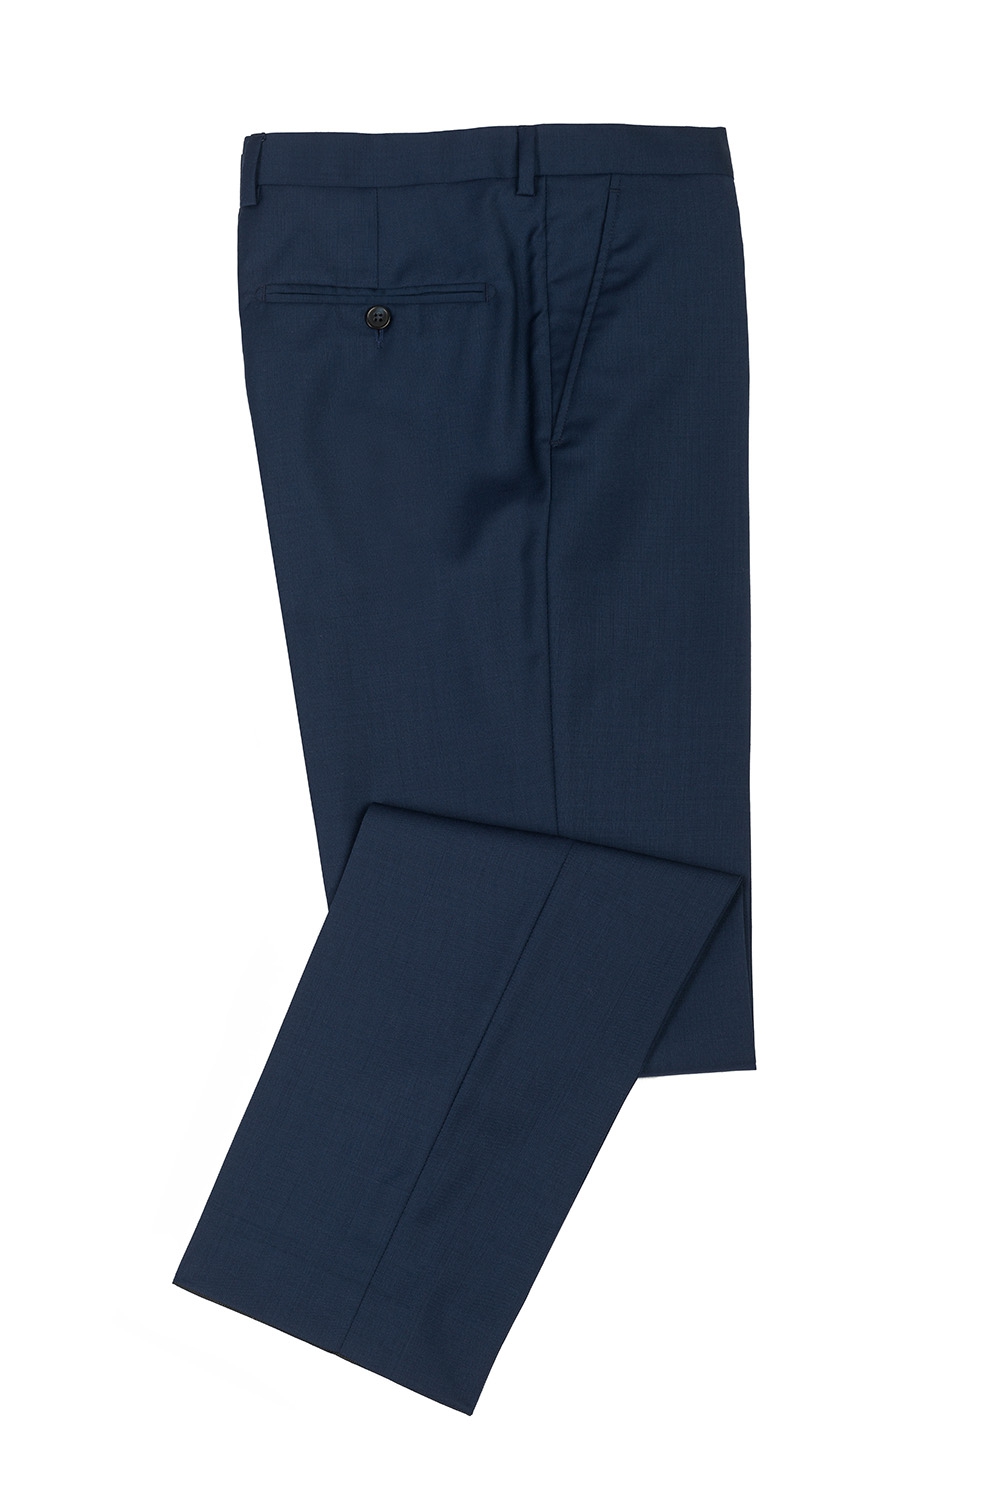 Pantaloni slim erico albastri uni 0